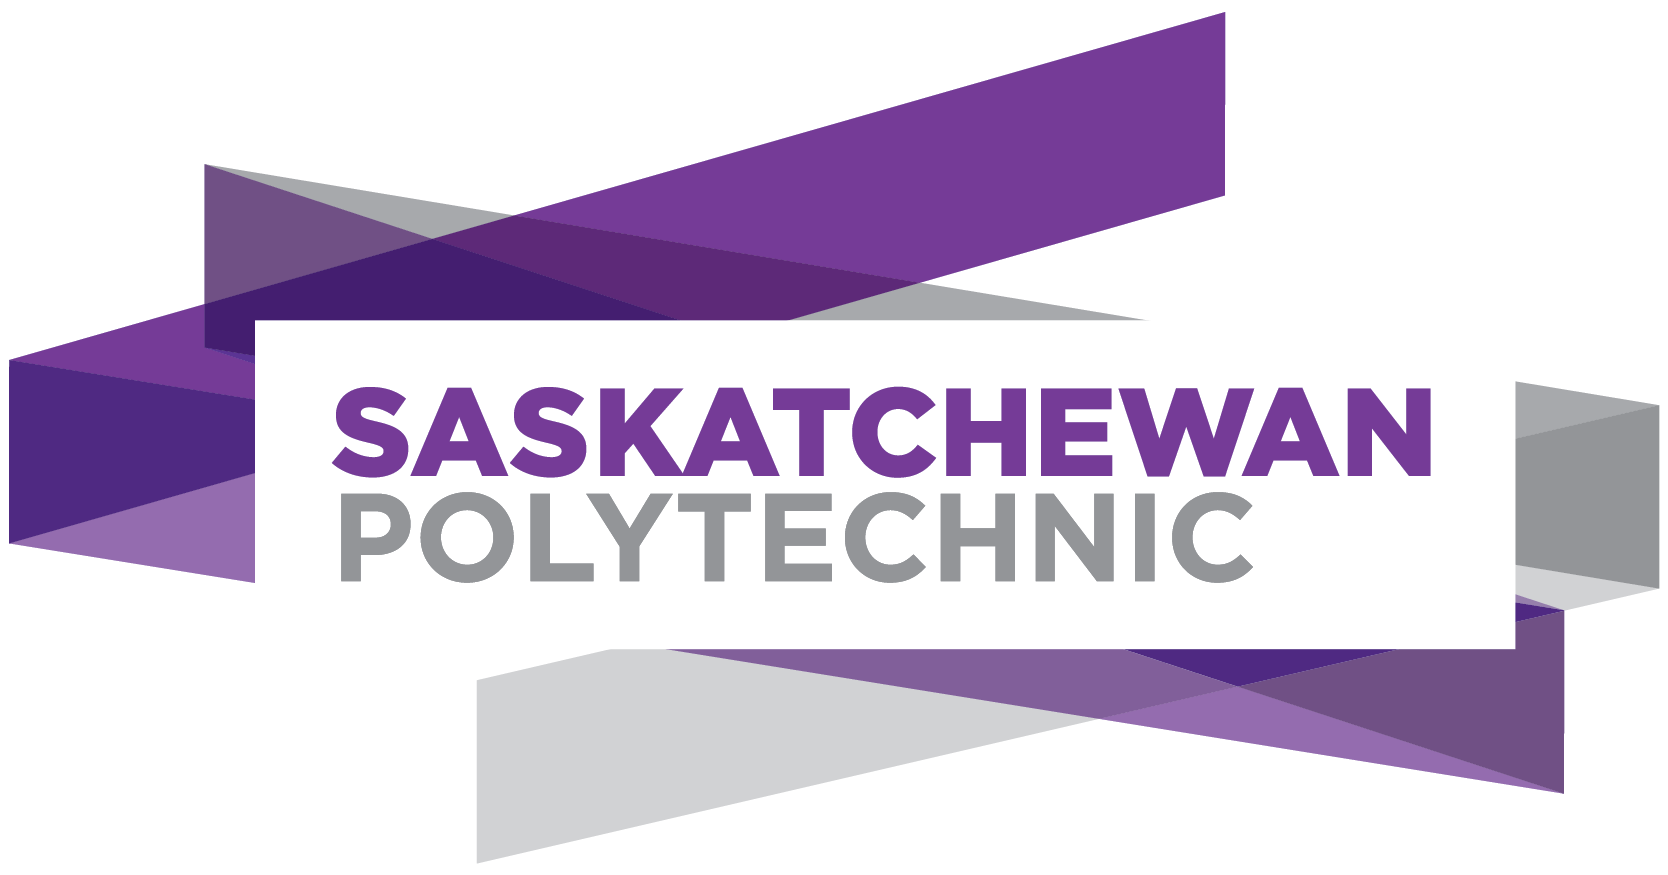 Sask Polytech logo full colour with release